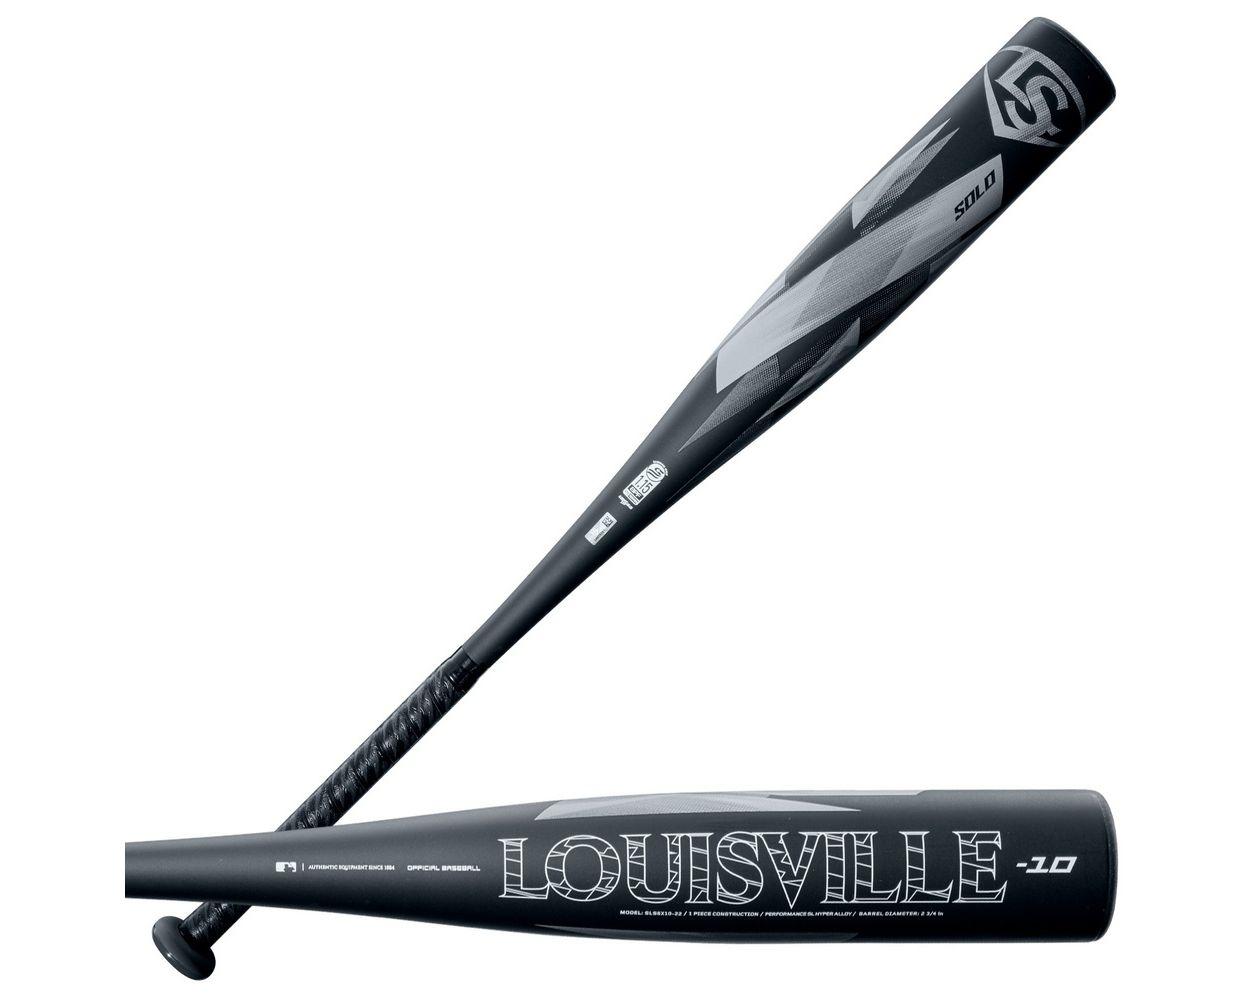 2022 Louisville Slugger Solo -8 USSSA Baseball Bat: WTLSLS6X0822